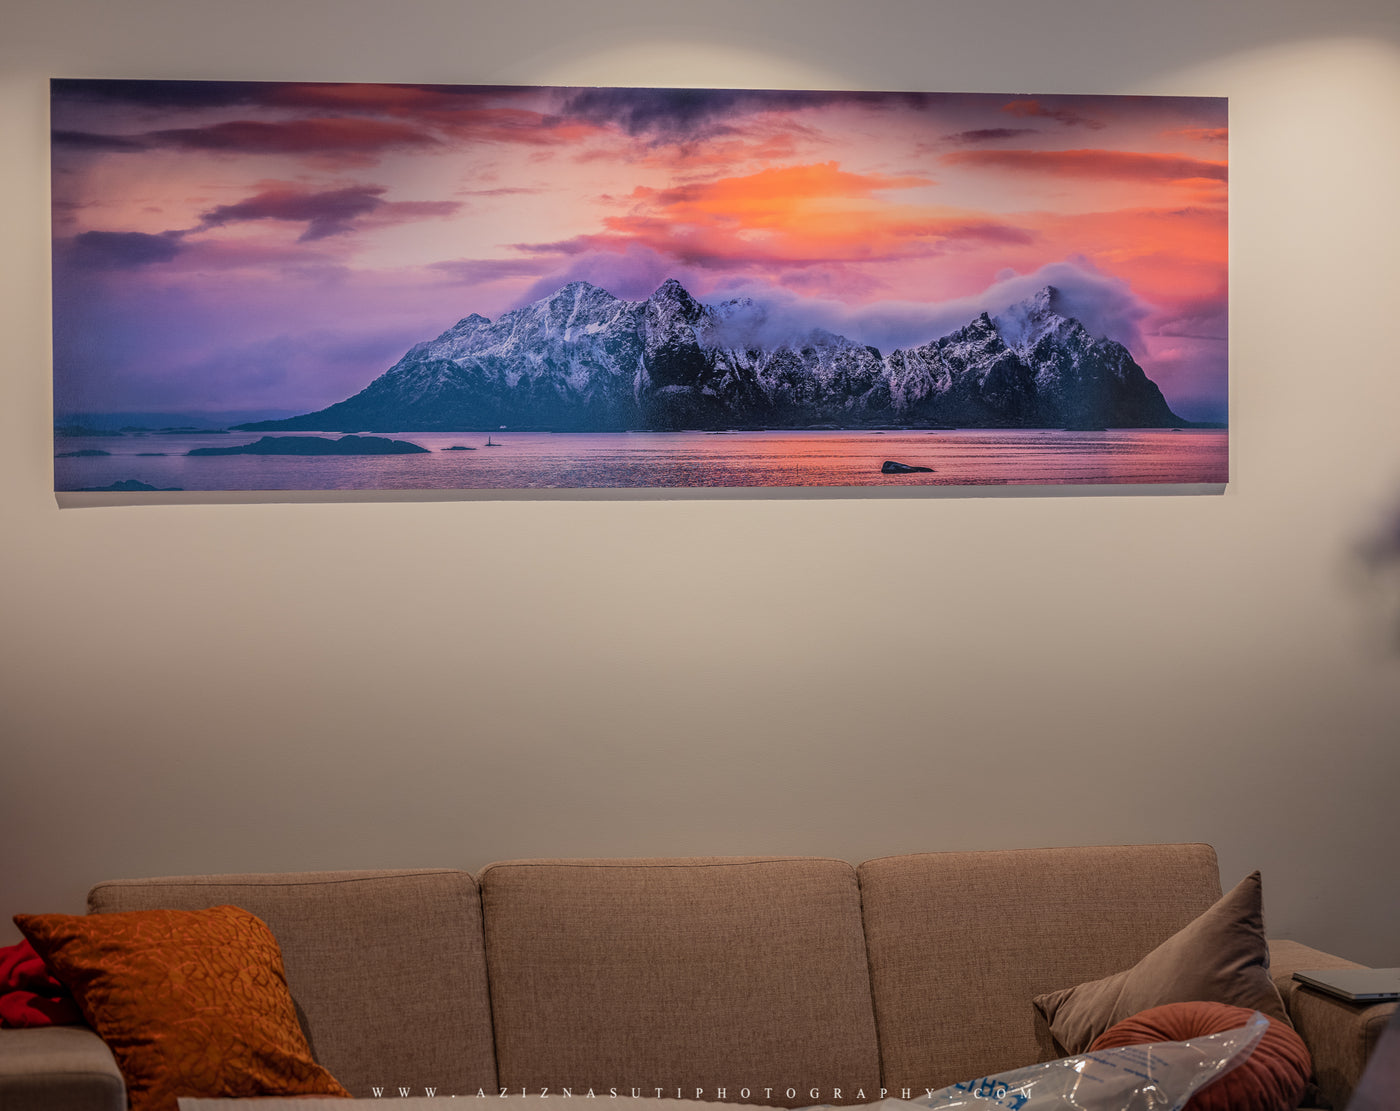 The beautiful lille Molla island in Lofoten on Gallery Print - AZIZ NASUTI ART GALLERY